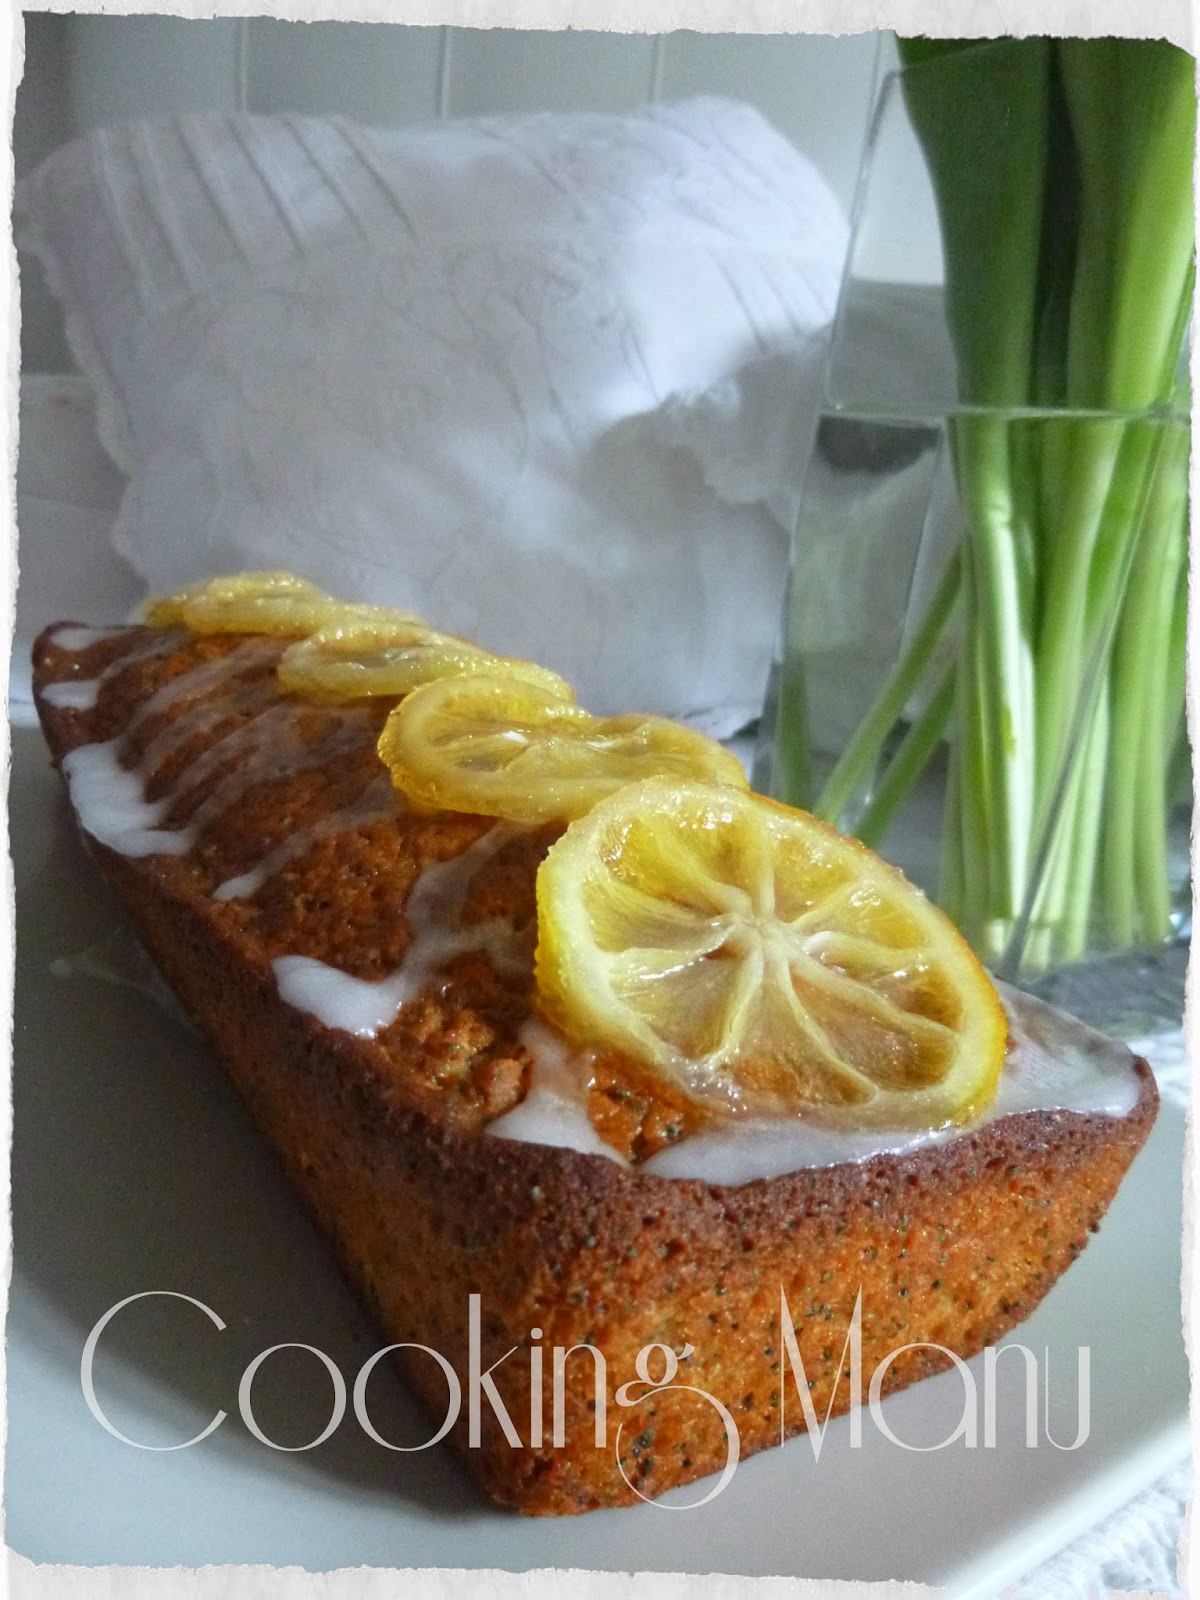 torta al limone con semi di papavero (lemon cake with poppy seeds)